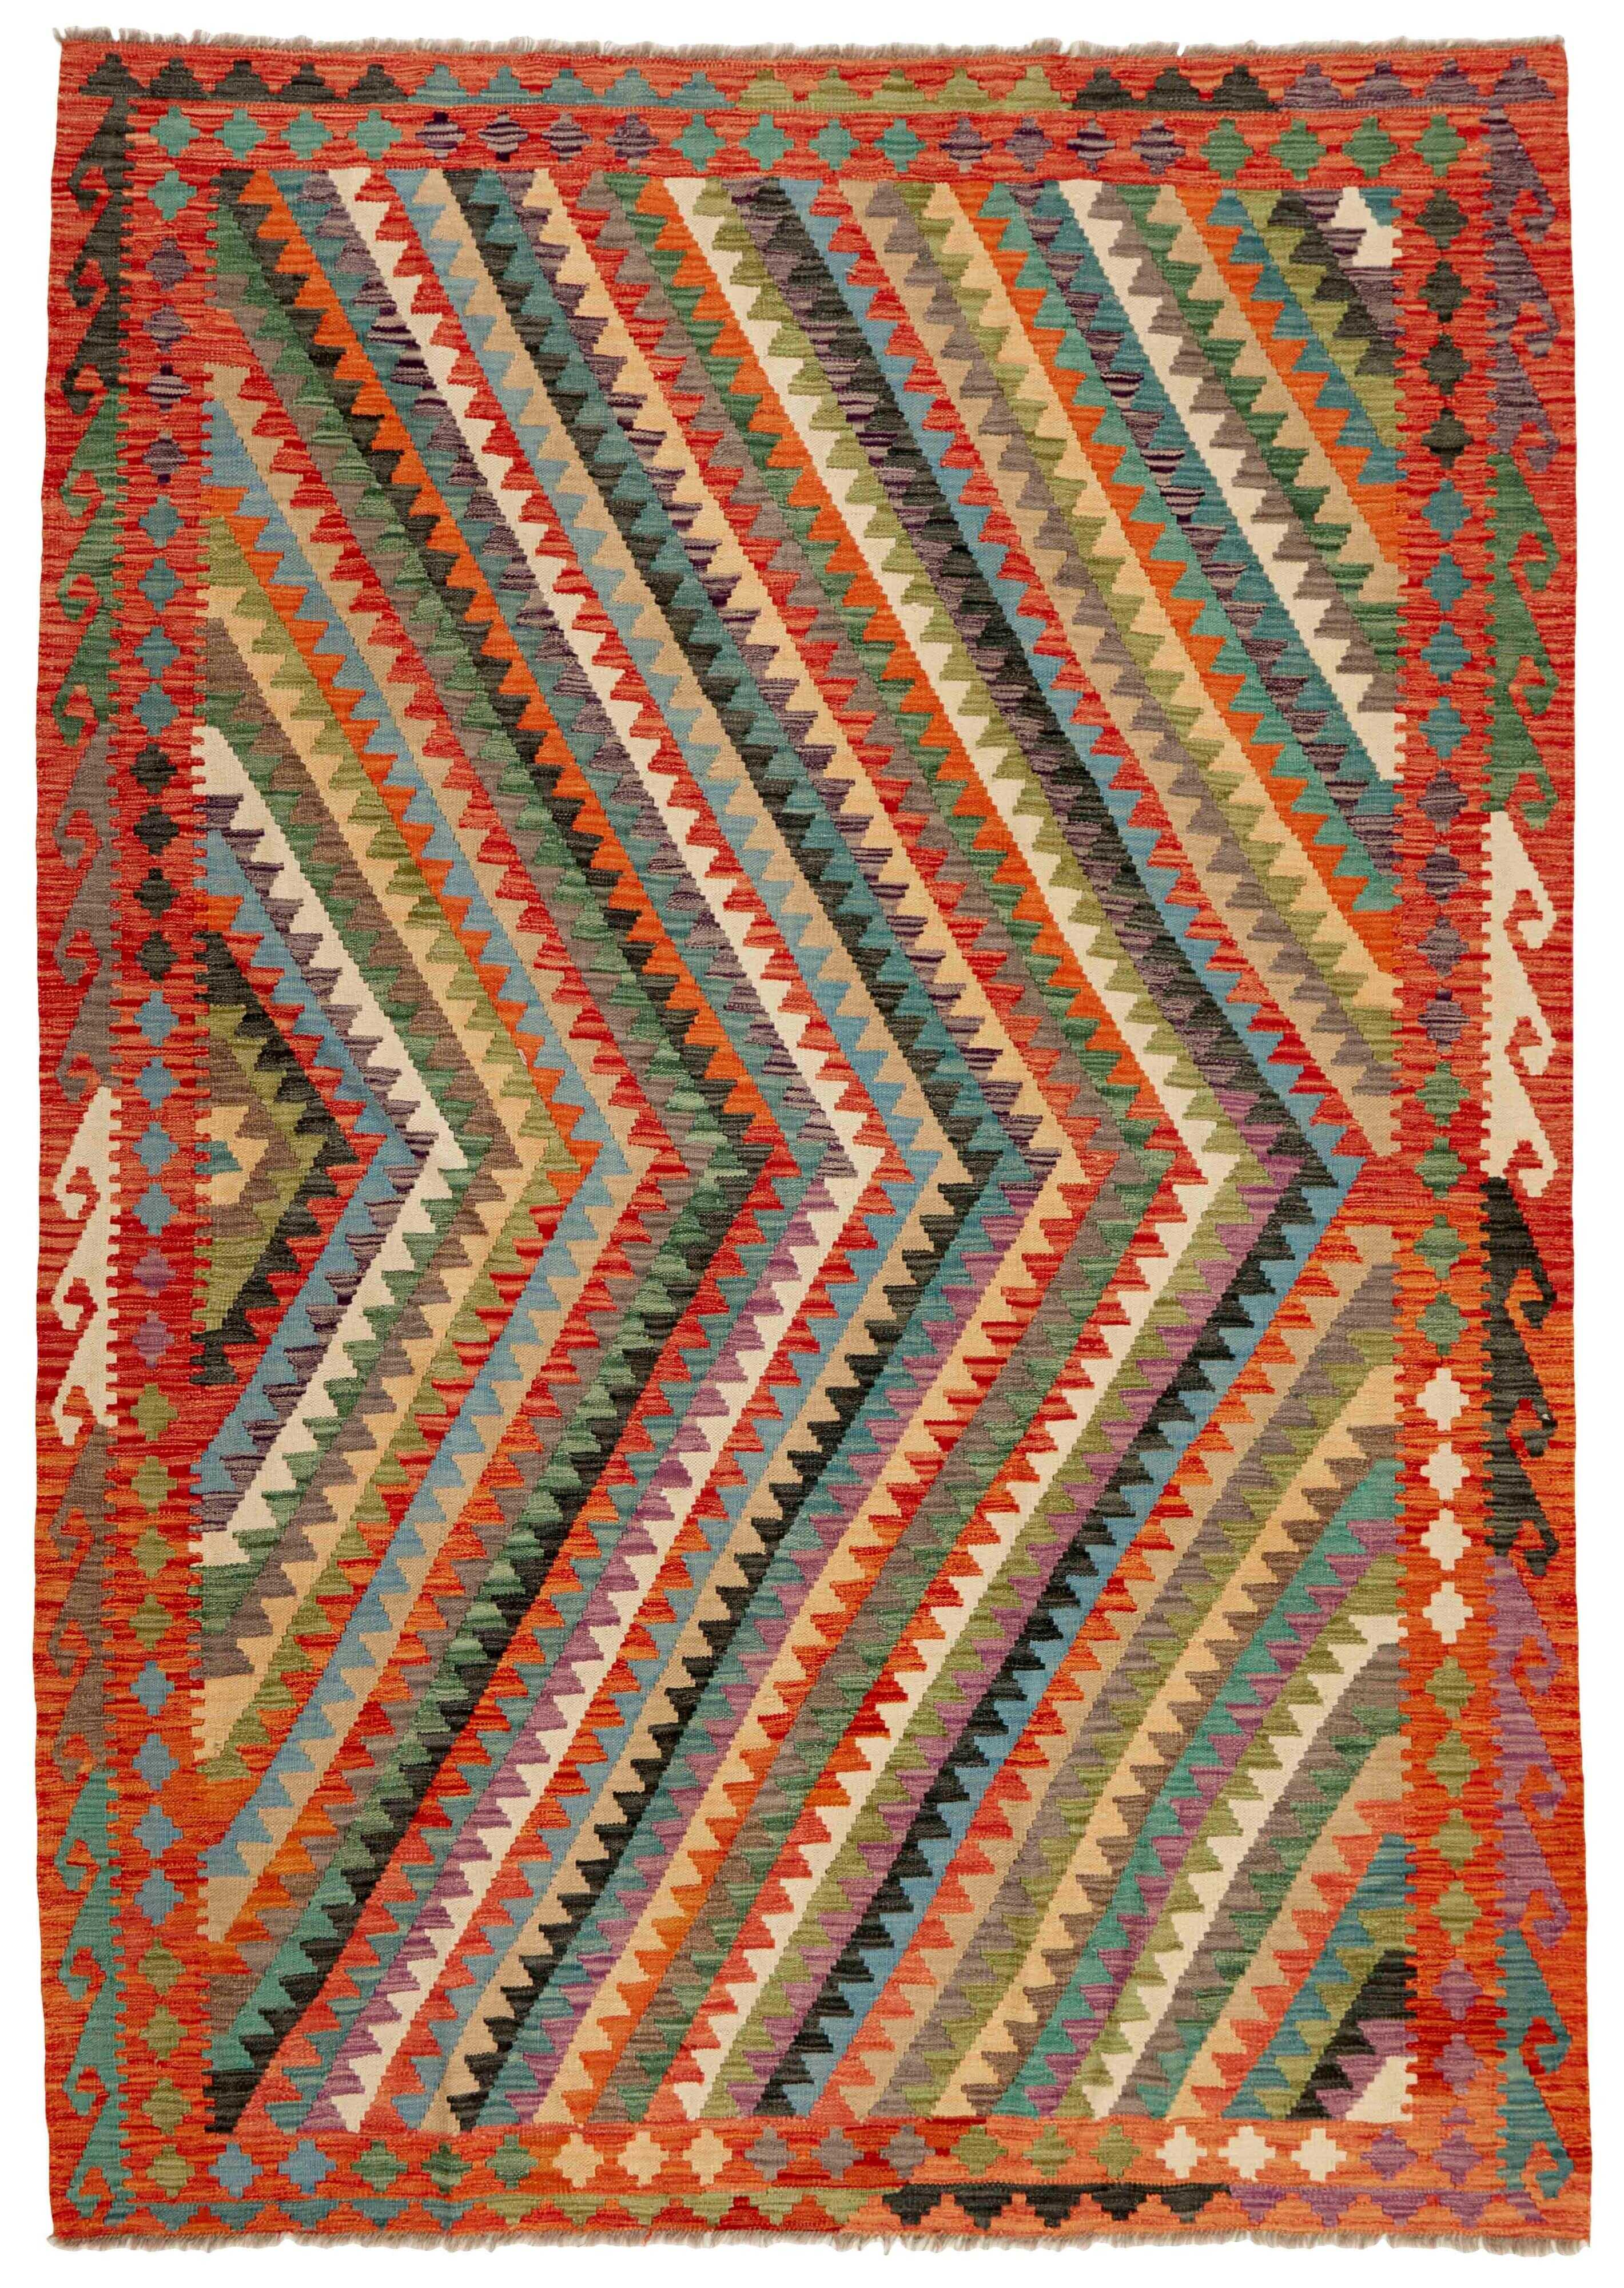 Oriental kelim flatweave rug with a geometric design in blue, red, yellow, beige and orange